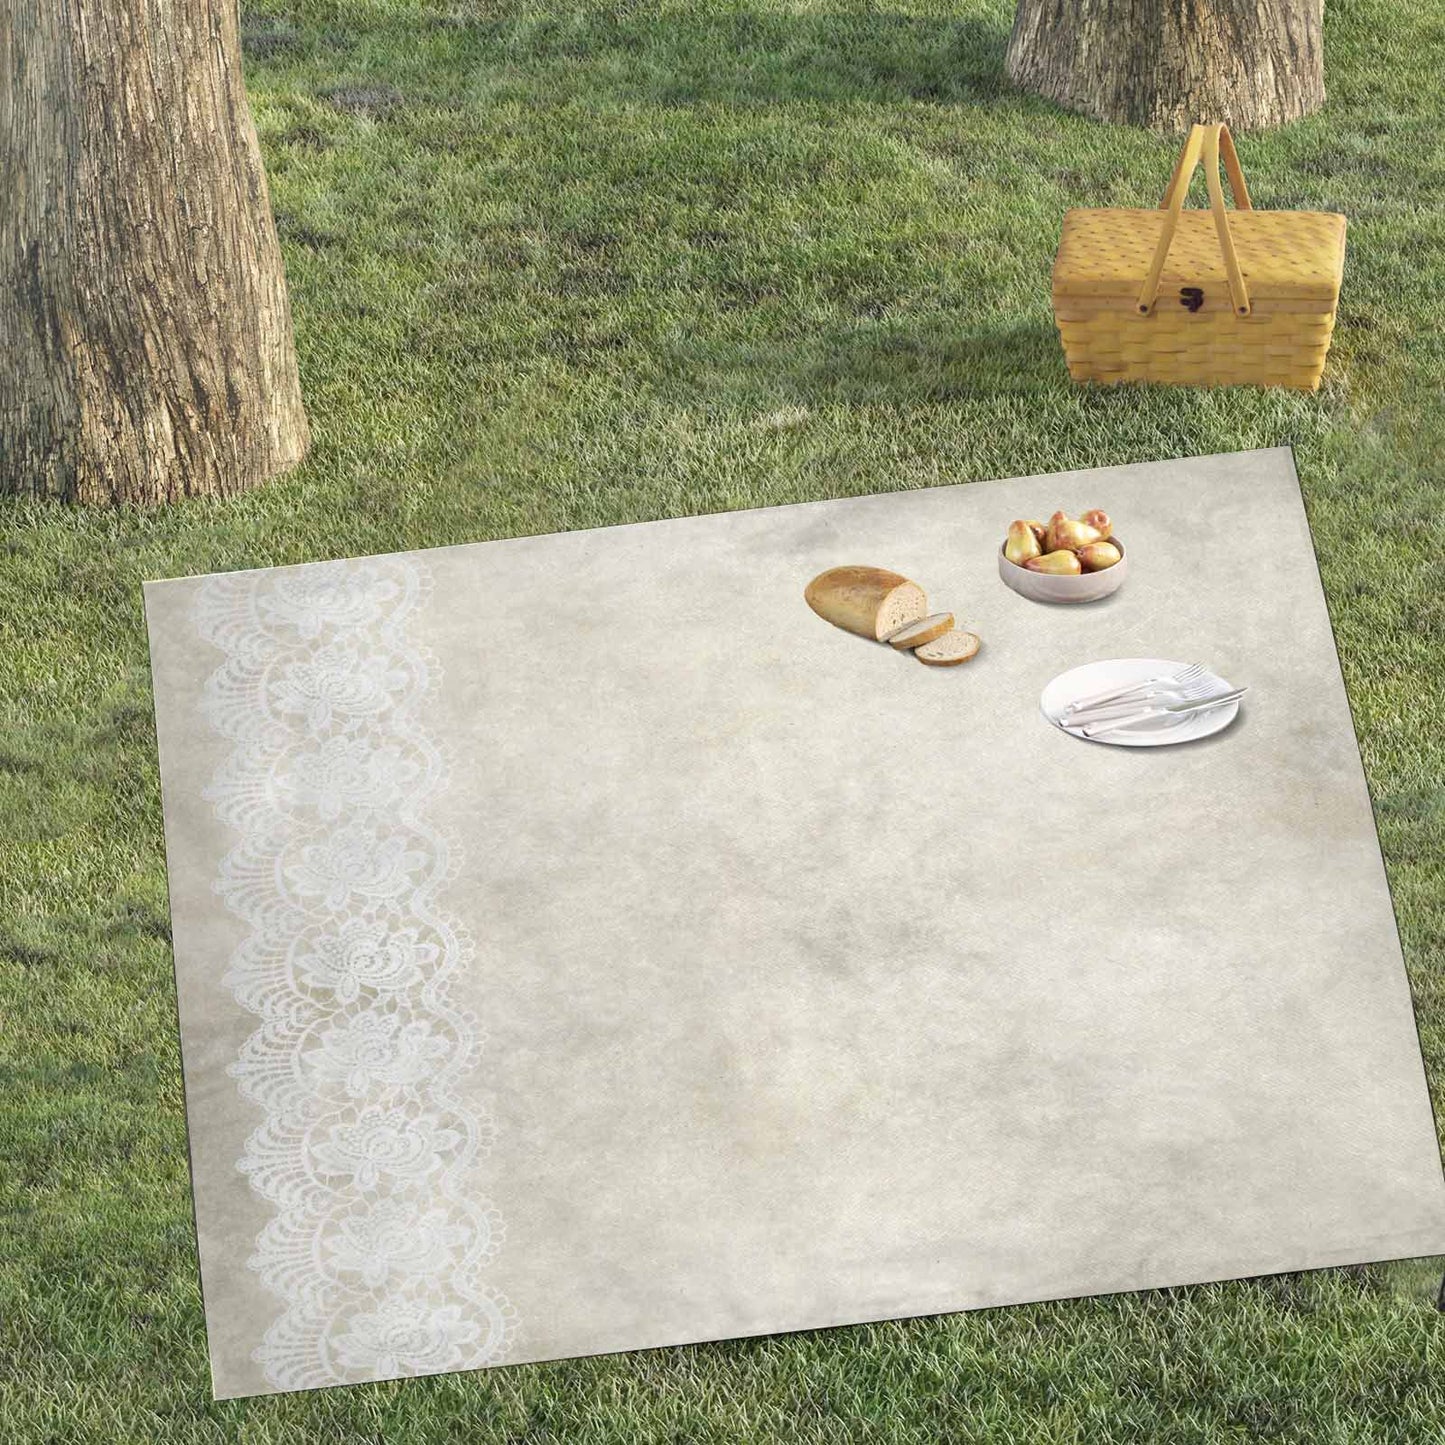 Victorian lace print waterproof picnic mat, 69 x 55in, design 27